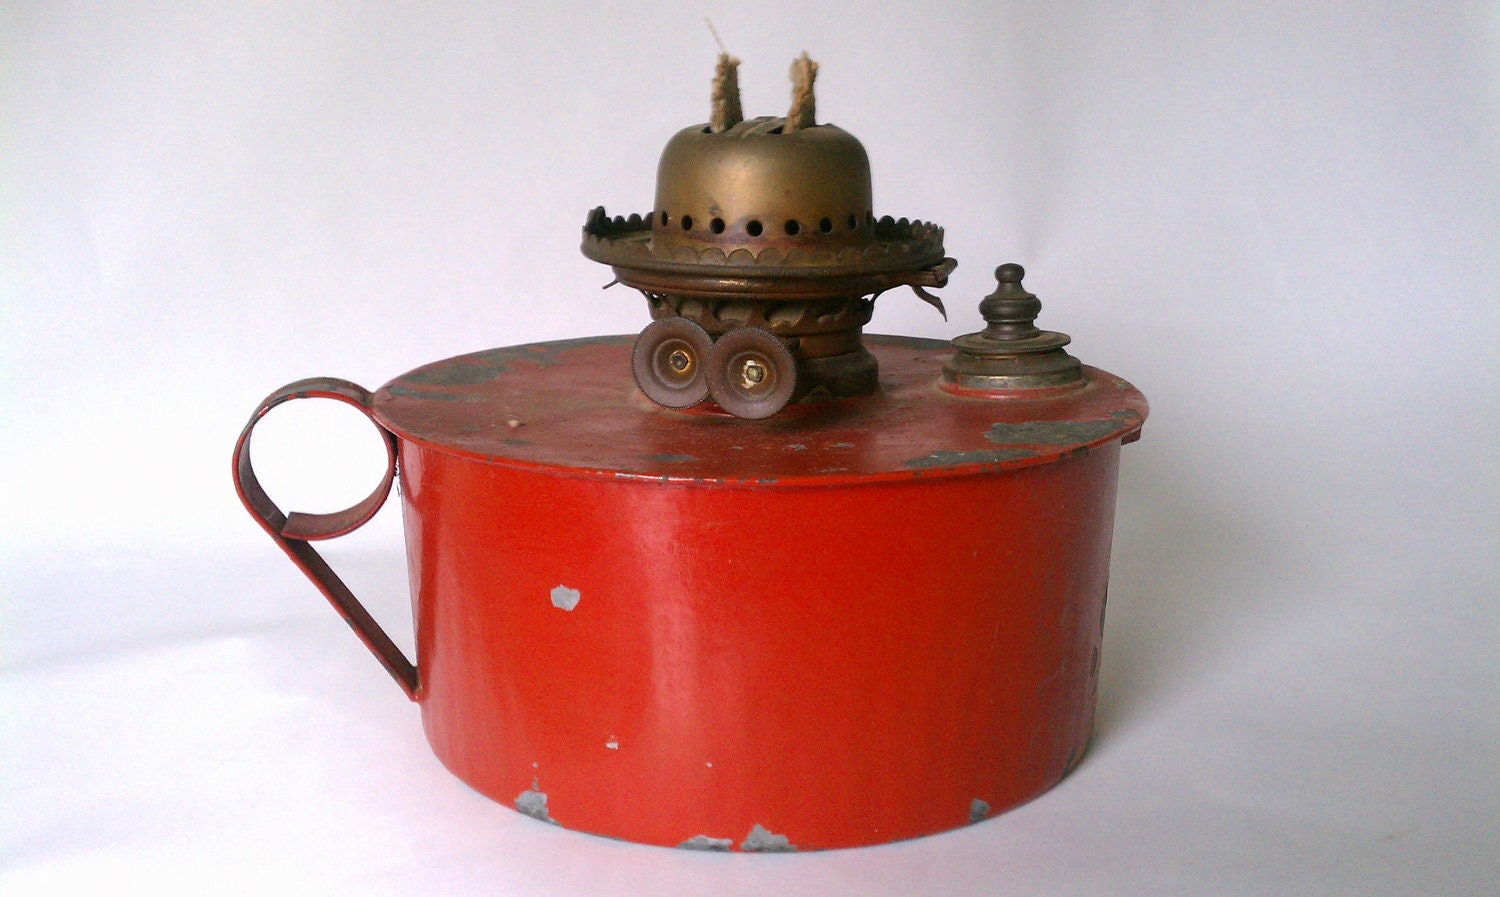 Antique Kerosene/Oil Lantern With a Double Wick Miller Burner Used as a Chicken Brooder or Egg Candler